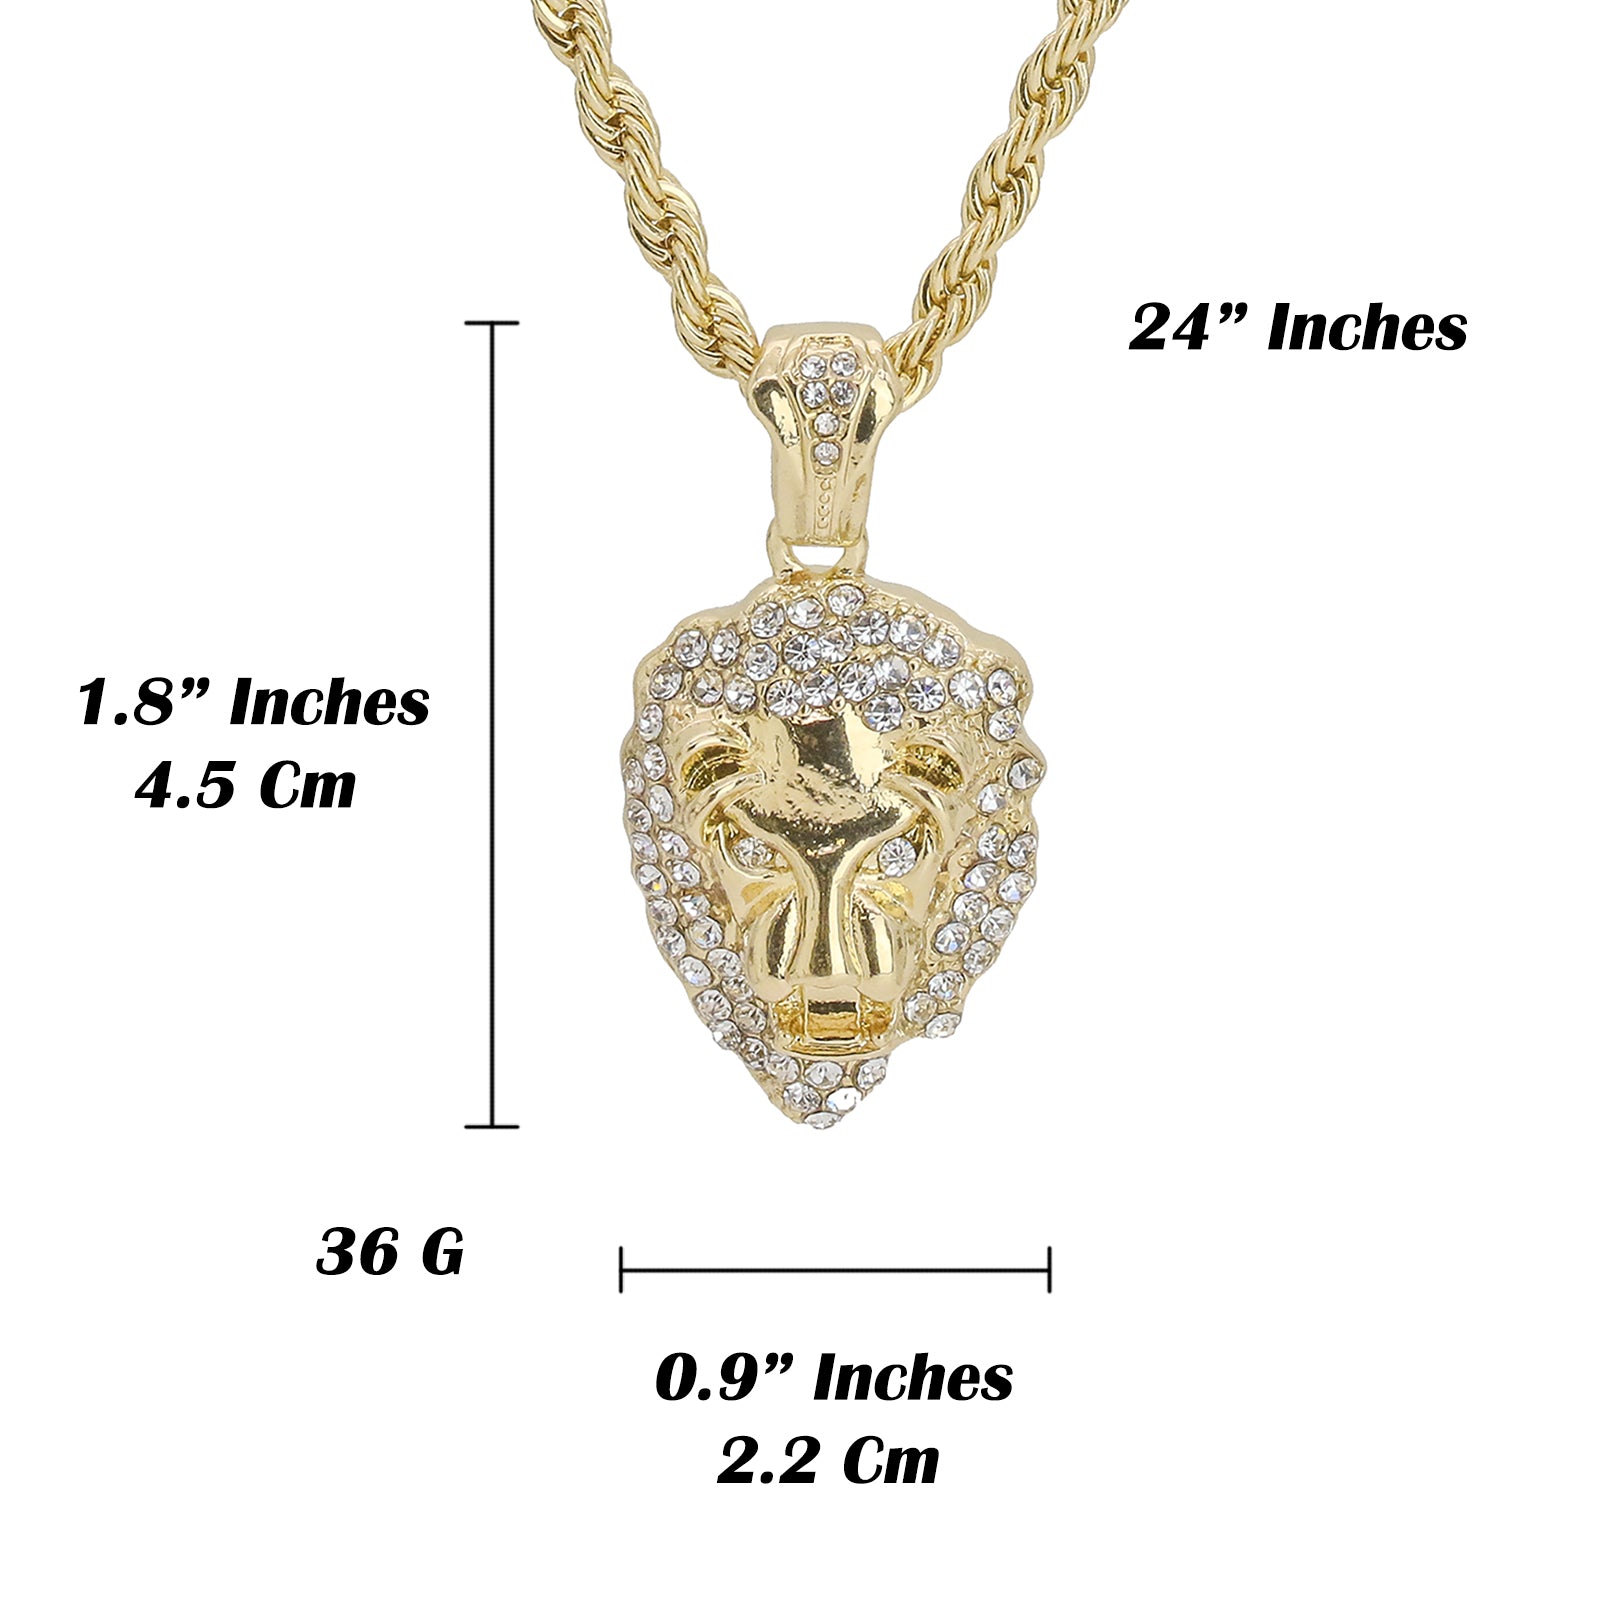 Cz Lion Face Pendant 24" Rope Chain Hip Hop 18k Jewelry